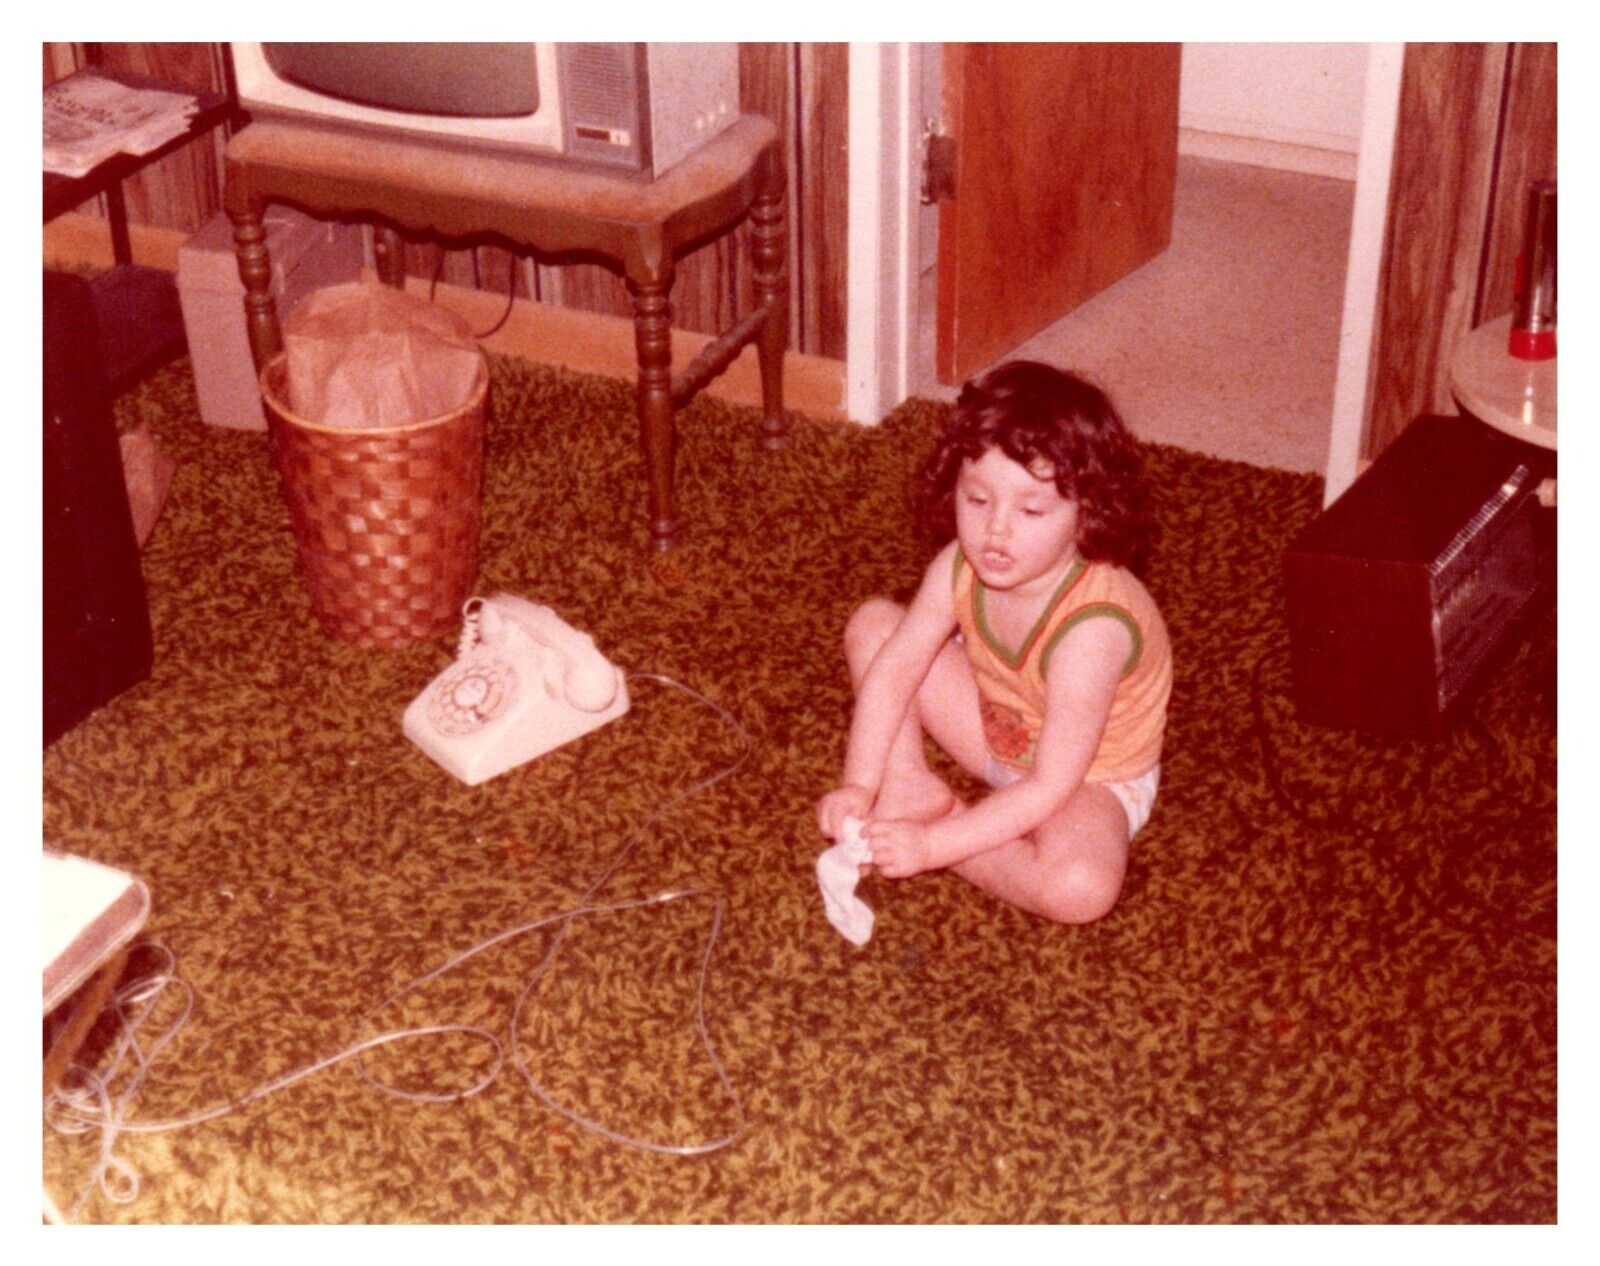 1970s Little Girl Putting on Socks Los Angeles Vintage Photo